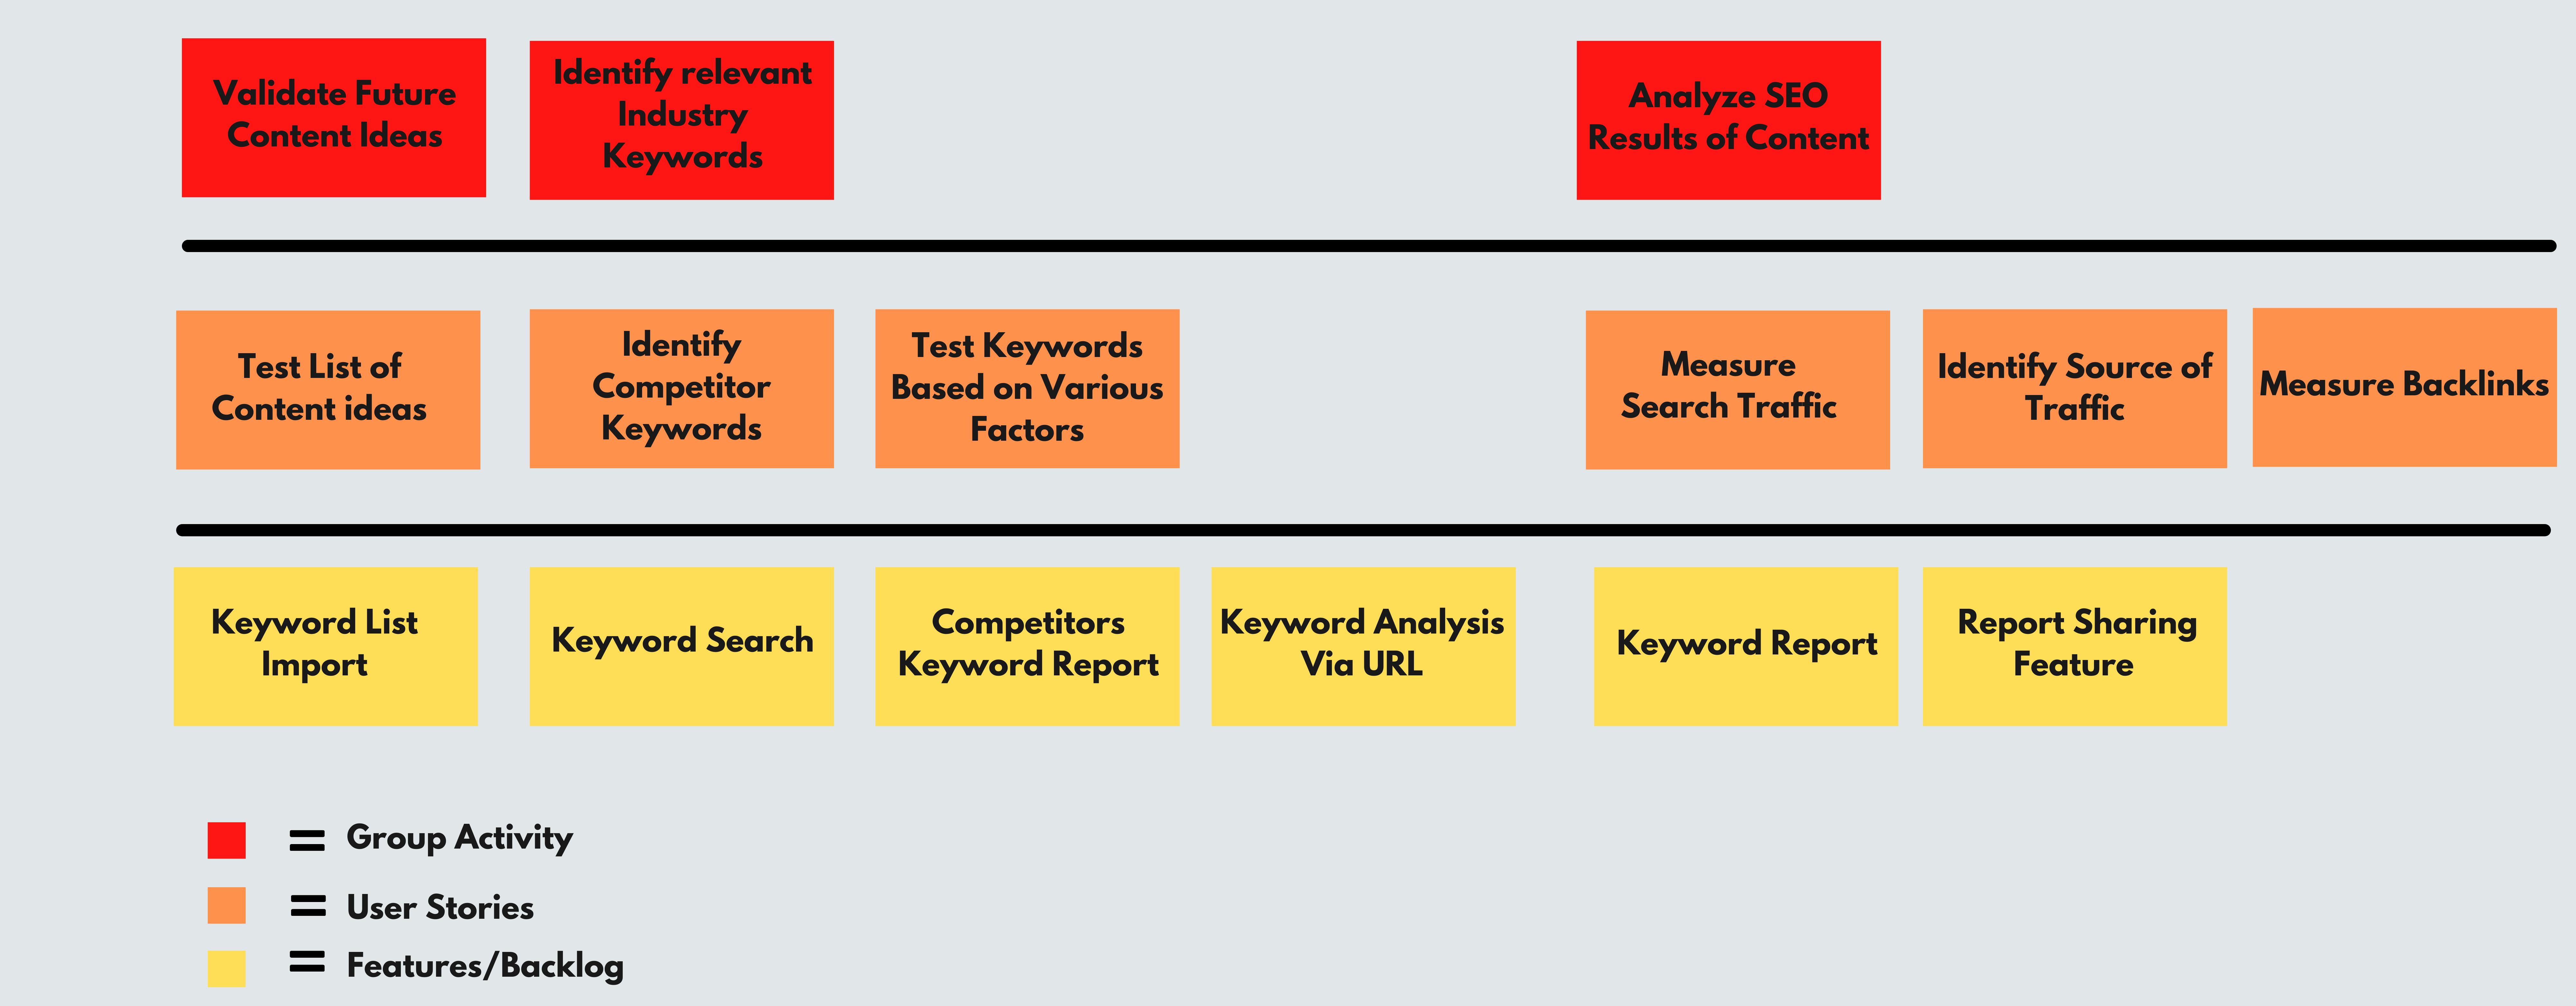 SEO Analysis Platform